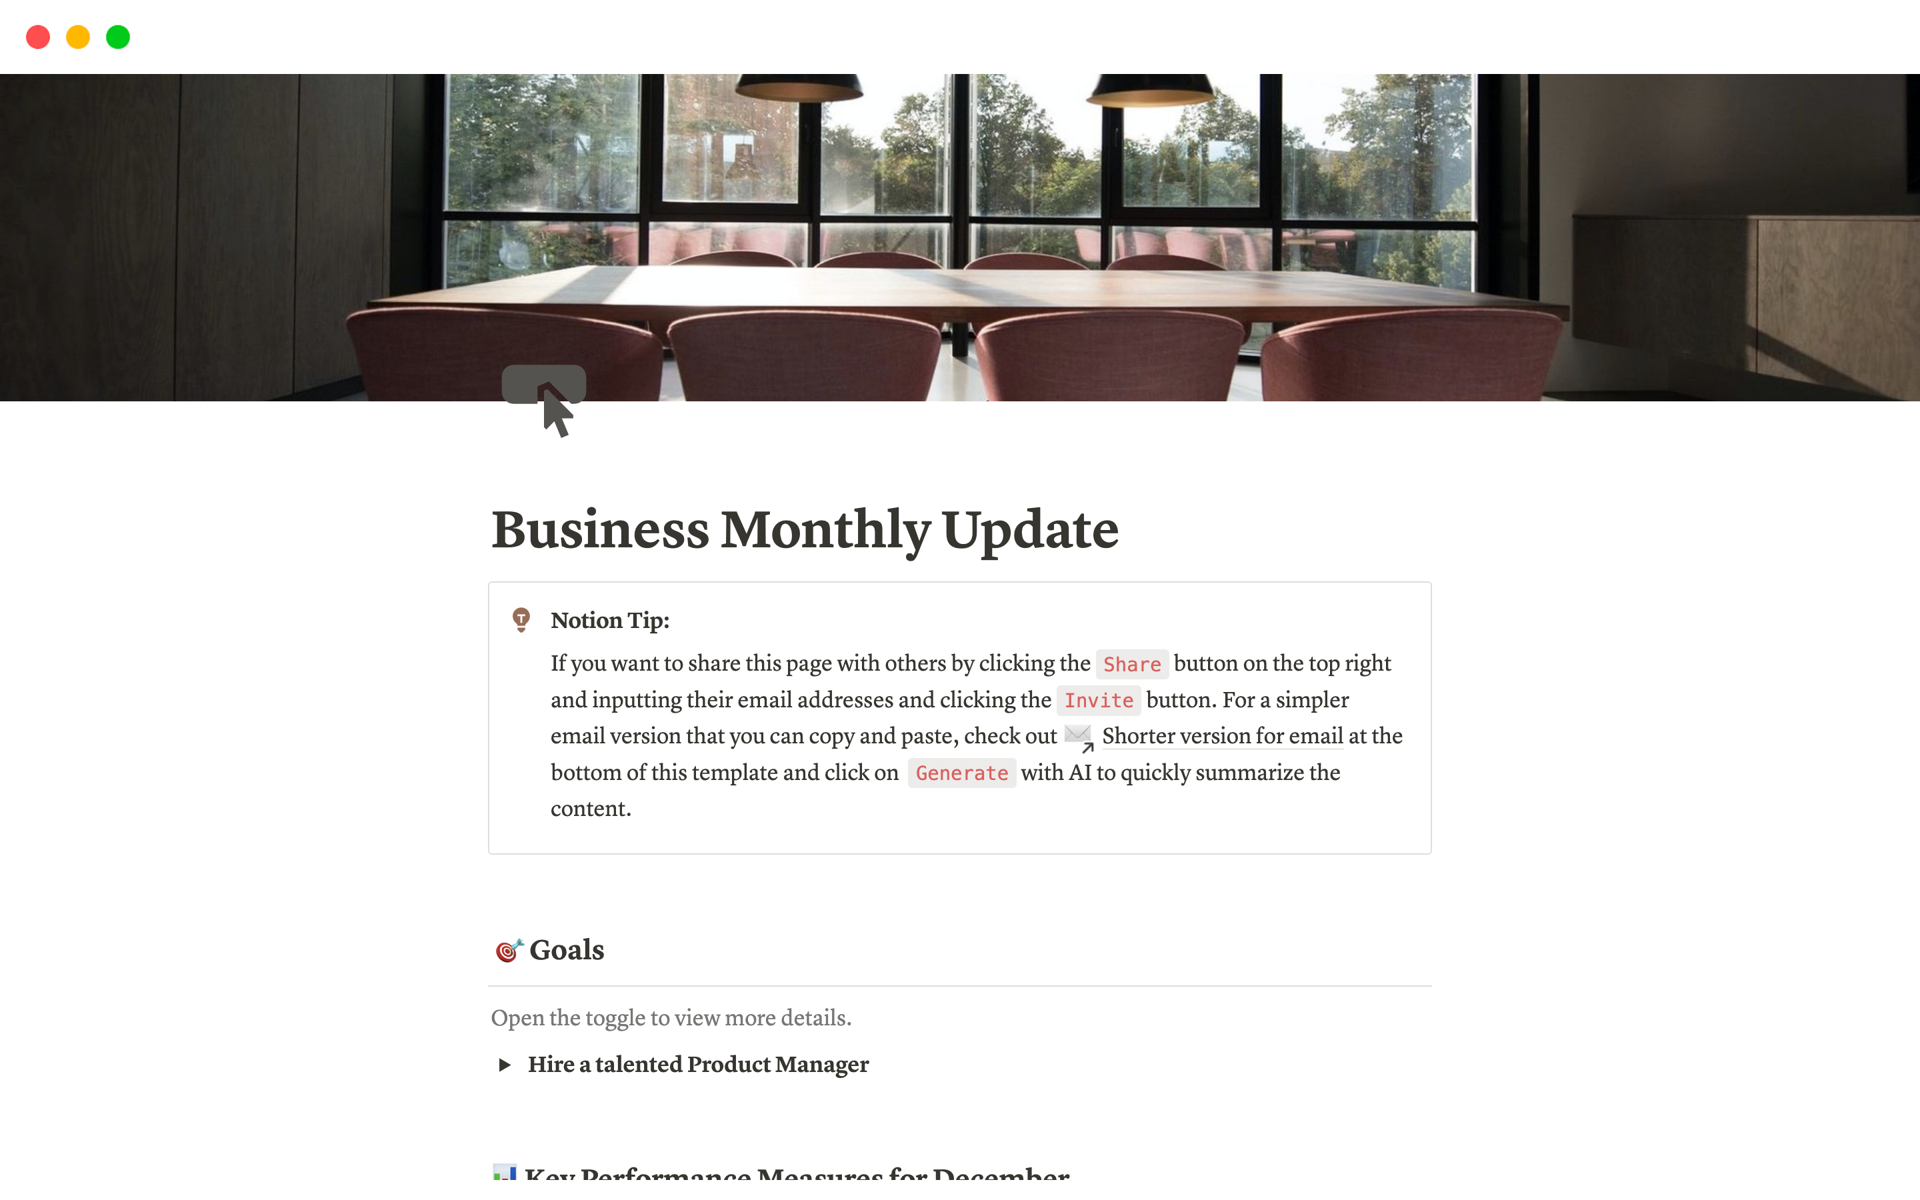 Aperçu du modèle de Business Monthly Update